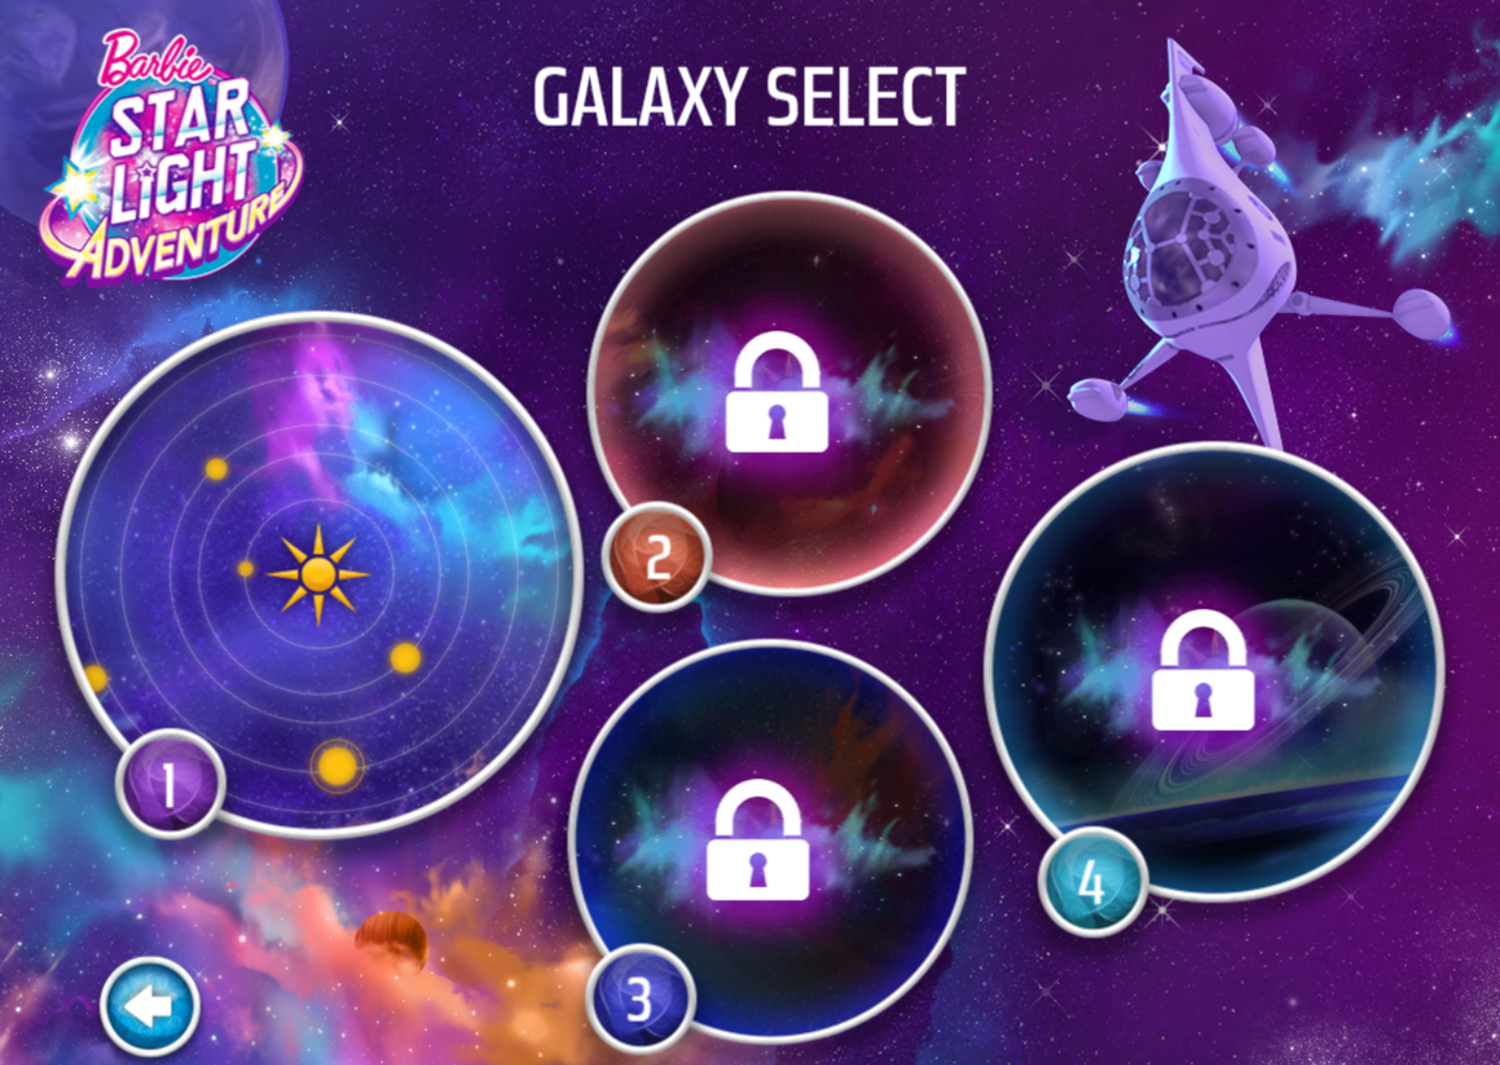 Barbie Star Light Adventure Game Galaxy Select Screenshot.